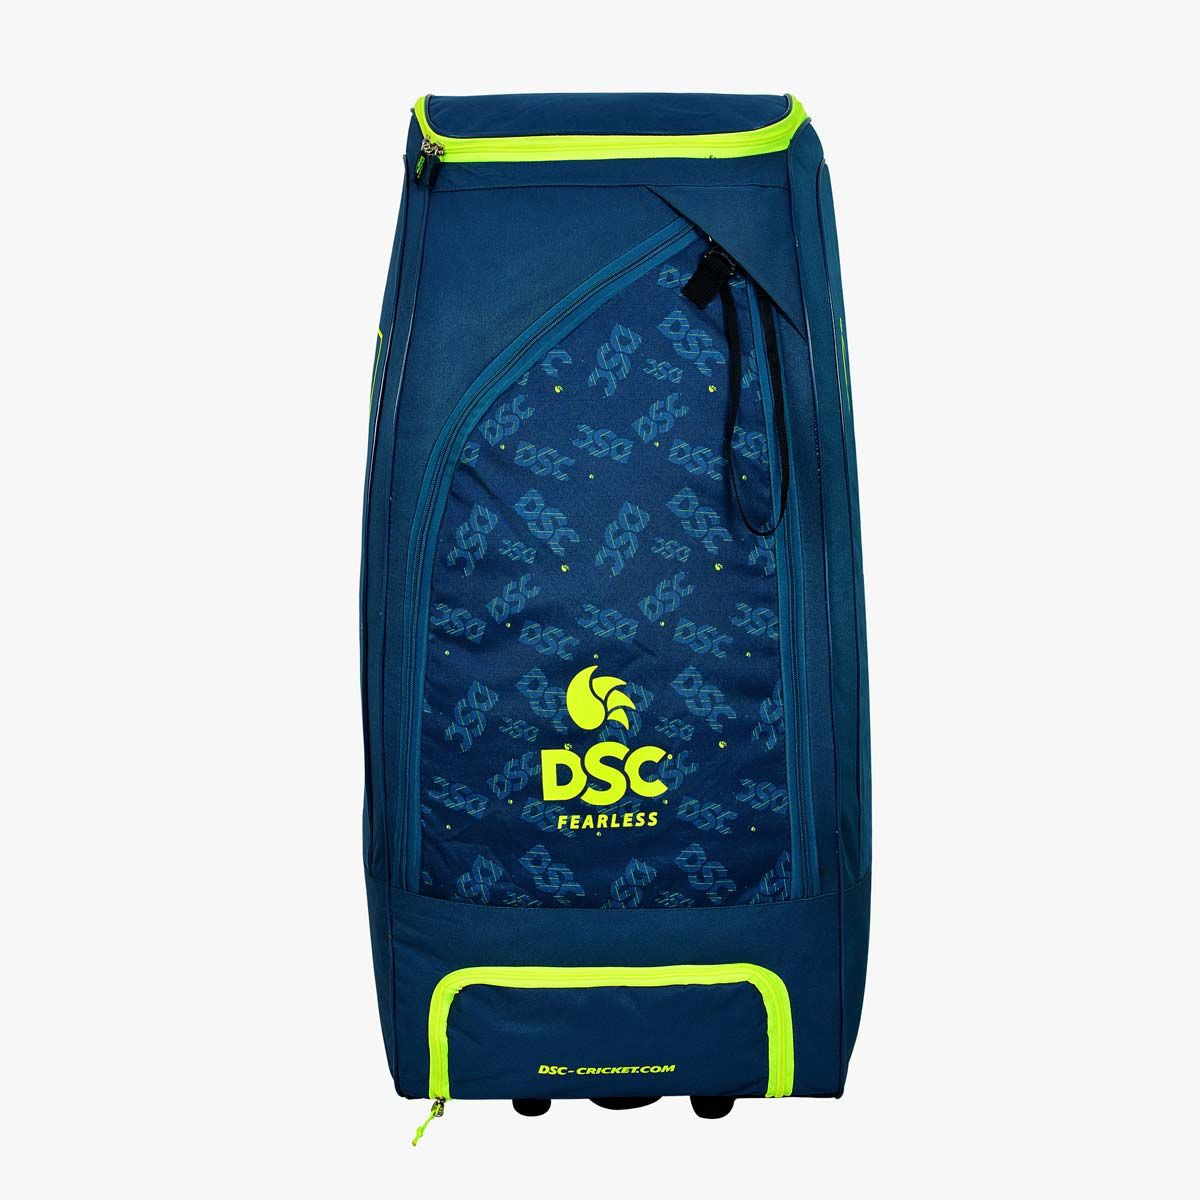 DSC Condor Pro Cricket Duffle Kit Bag With Wheels - Men's